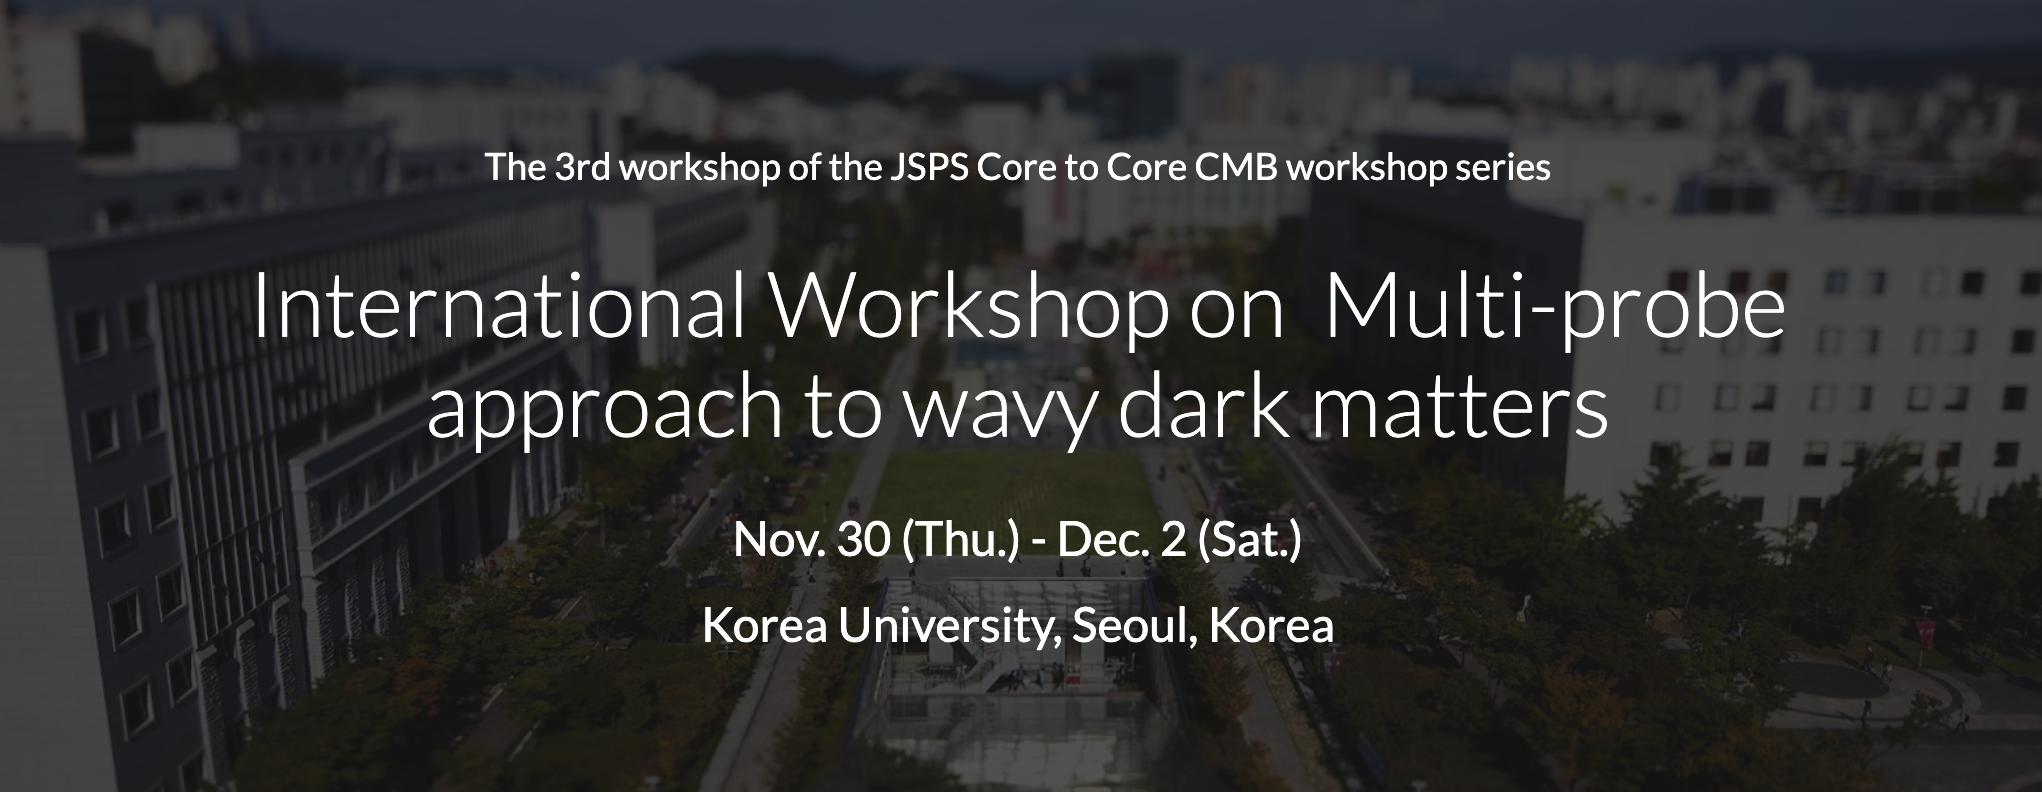 International Workshop on Multi-probe approach to wavy dark matters